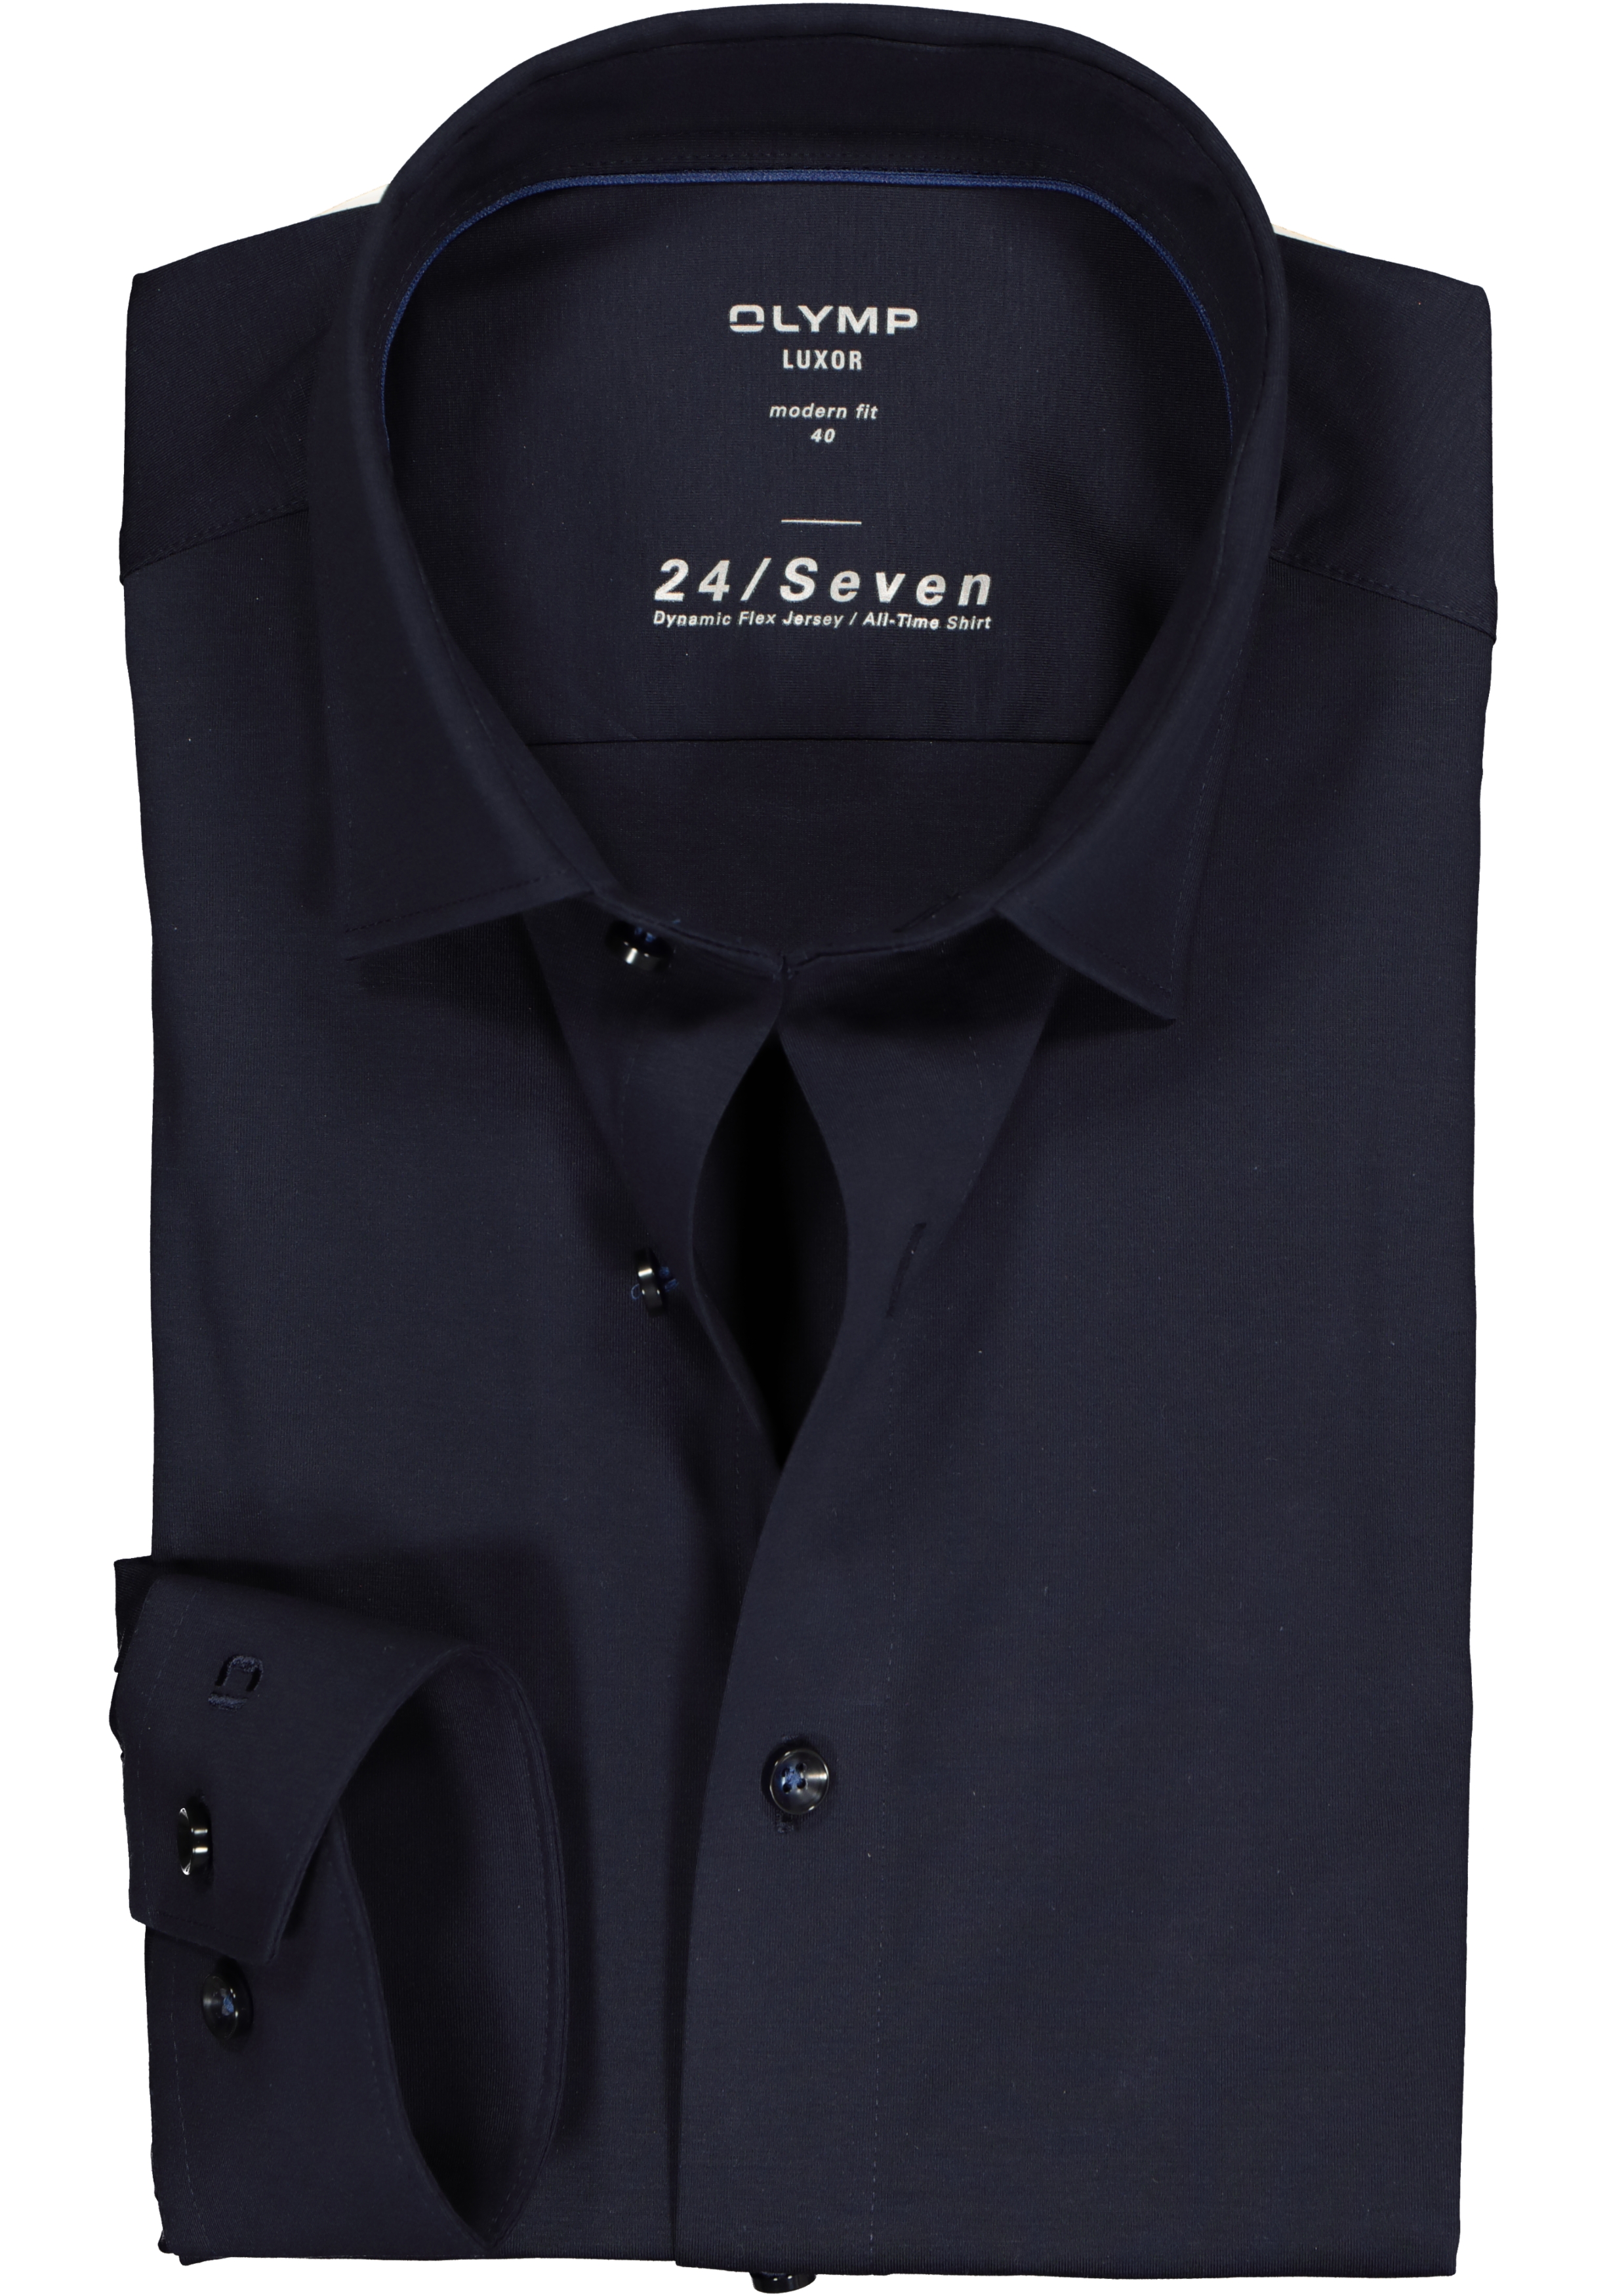 OLYMP Luxor 24/Seven modern fit overhemd, marine blauw tricot